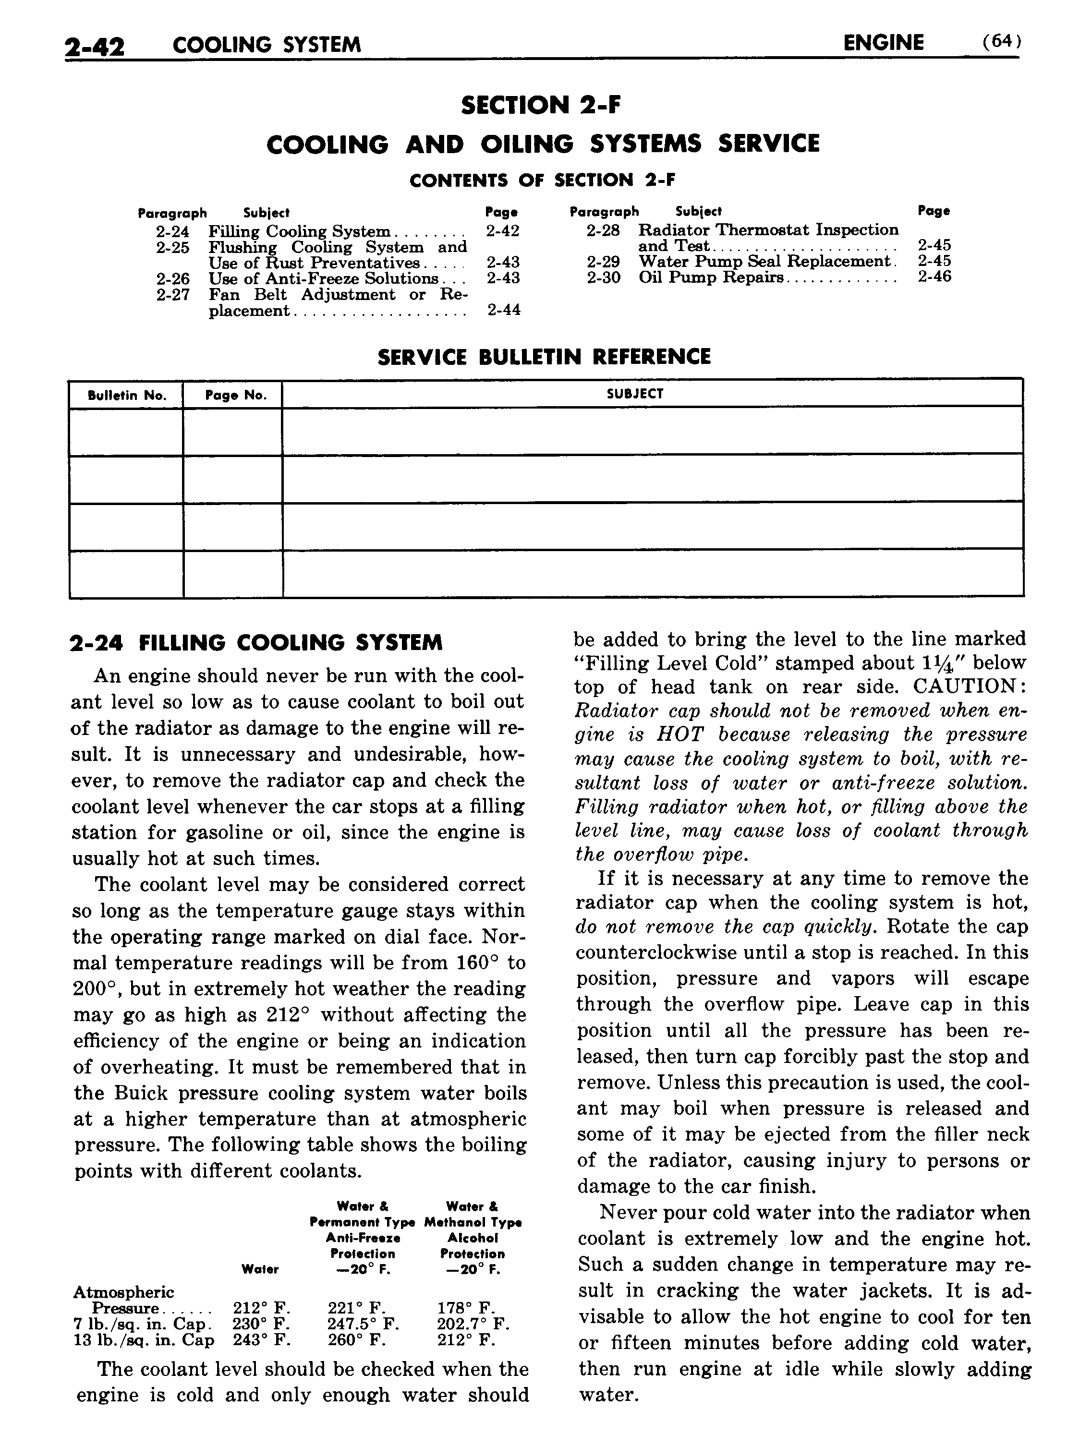 n_03 1948 Buick Shop Manual - Engine-042-042.jpg